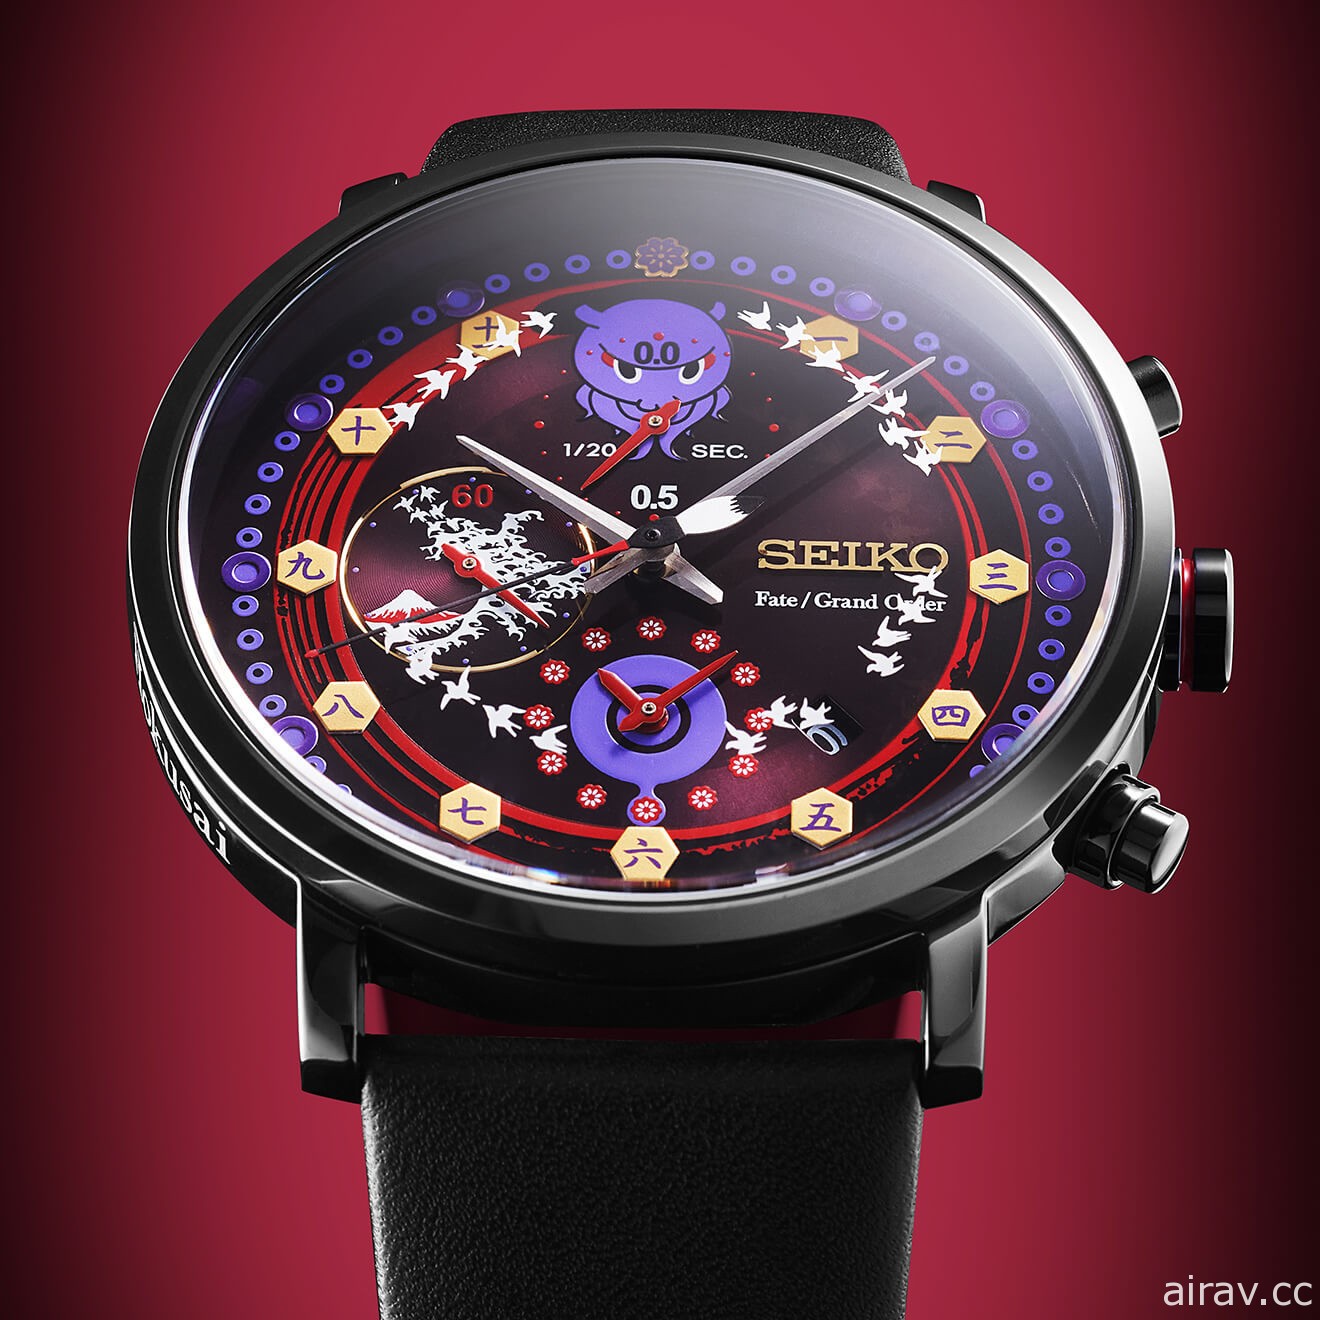 《Fate/Grand Order》以從者「葛飾北齋」為靈感推出的手錶開放預購